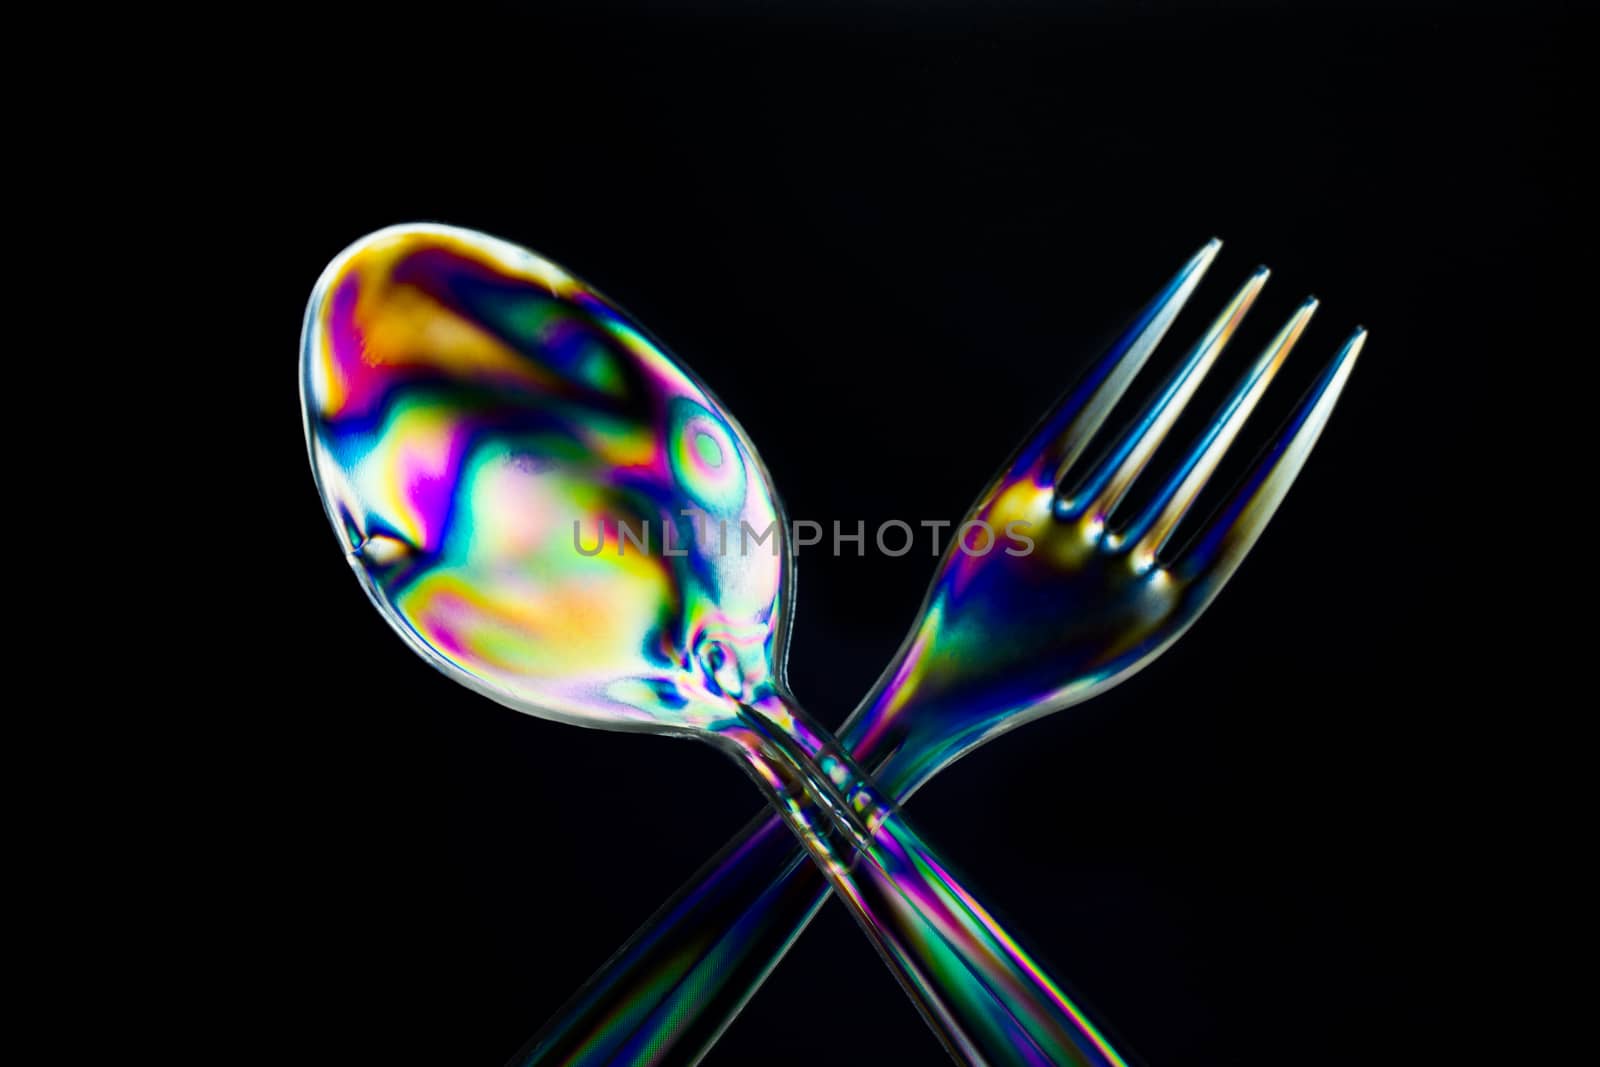 Spoon Birefringence